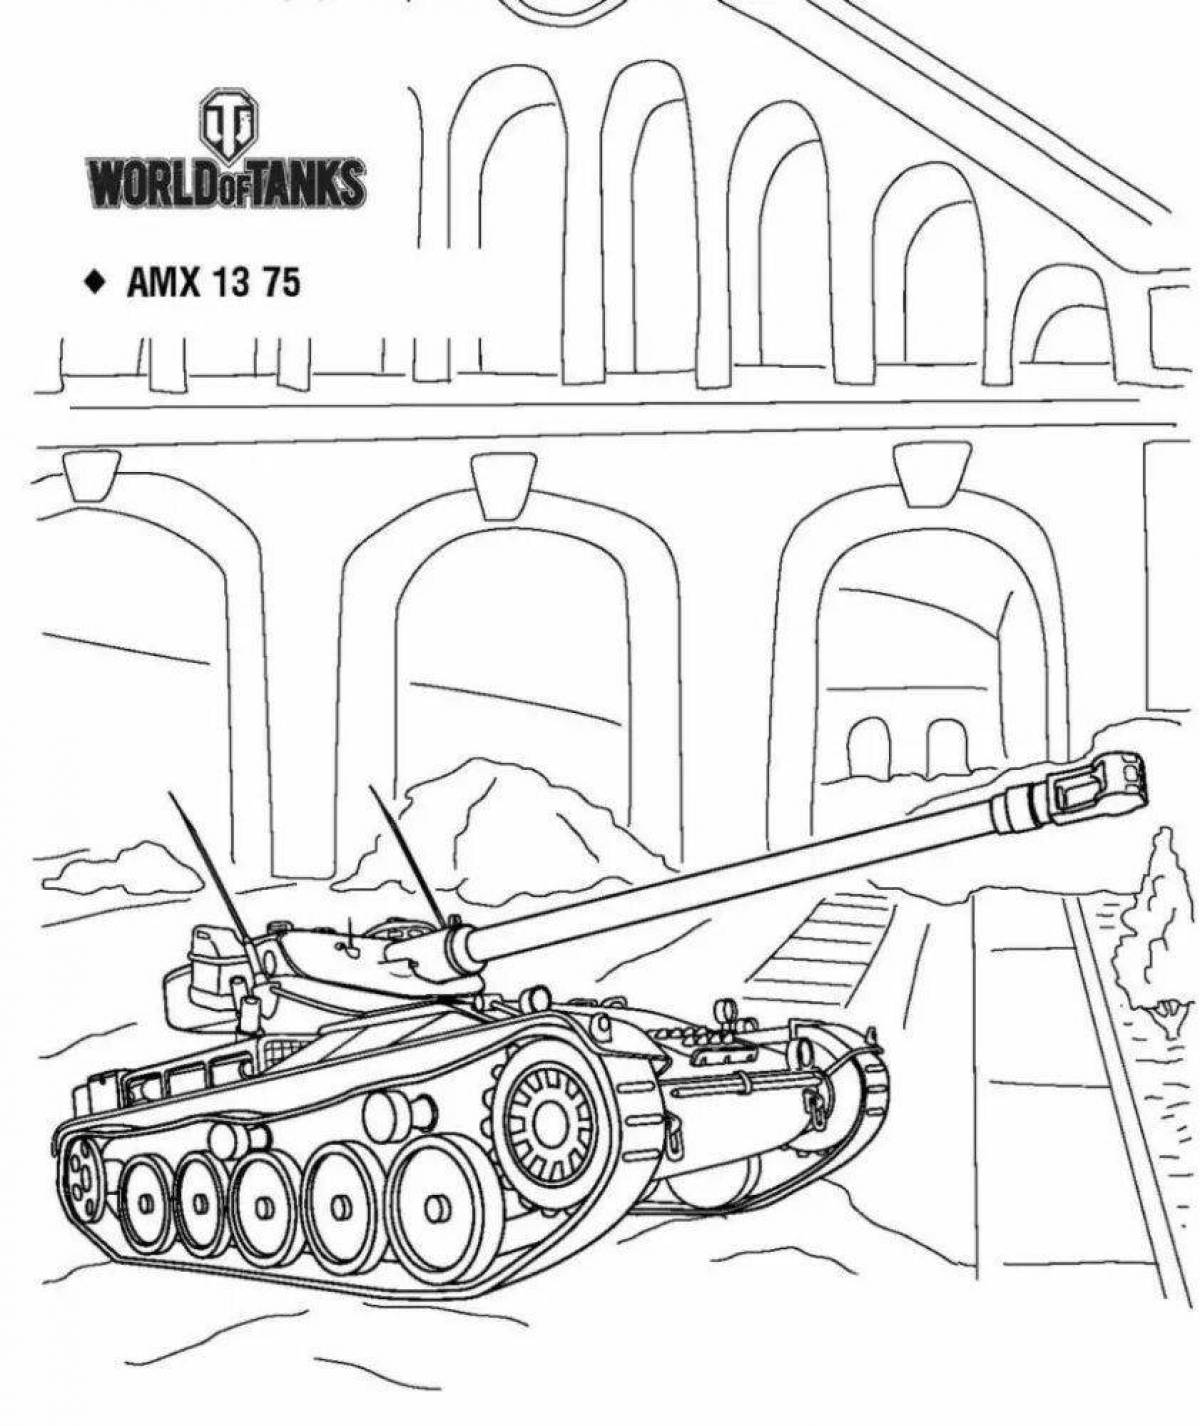 World of tanks #6